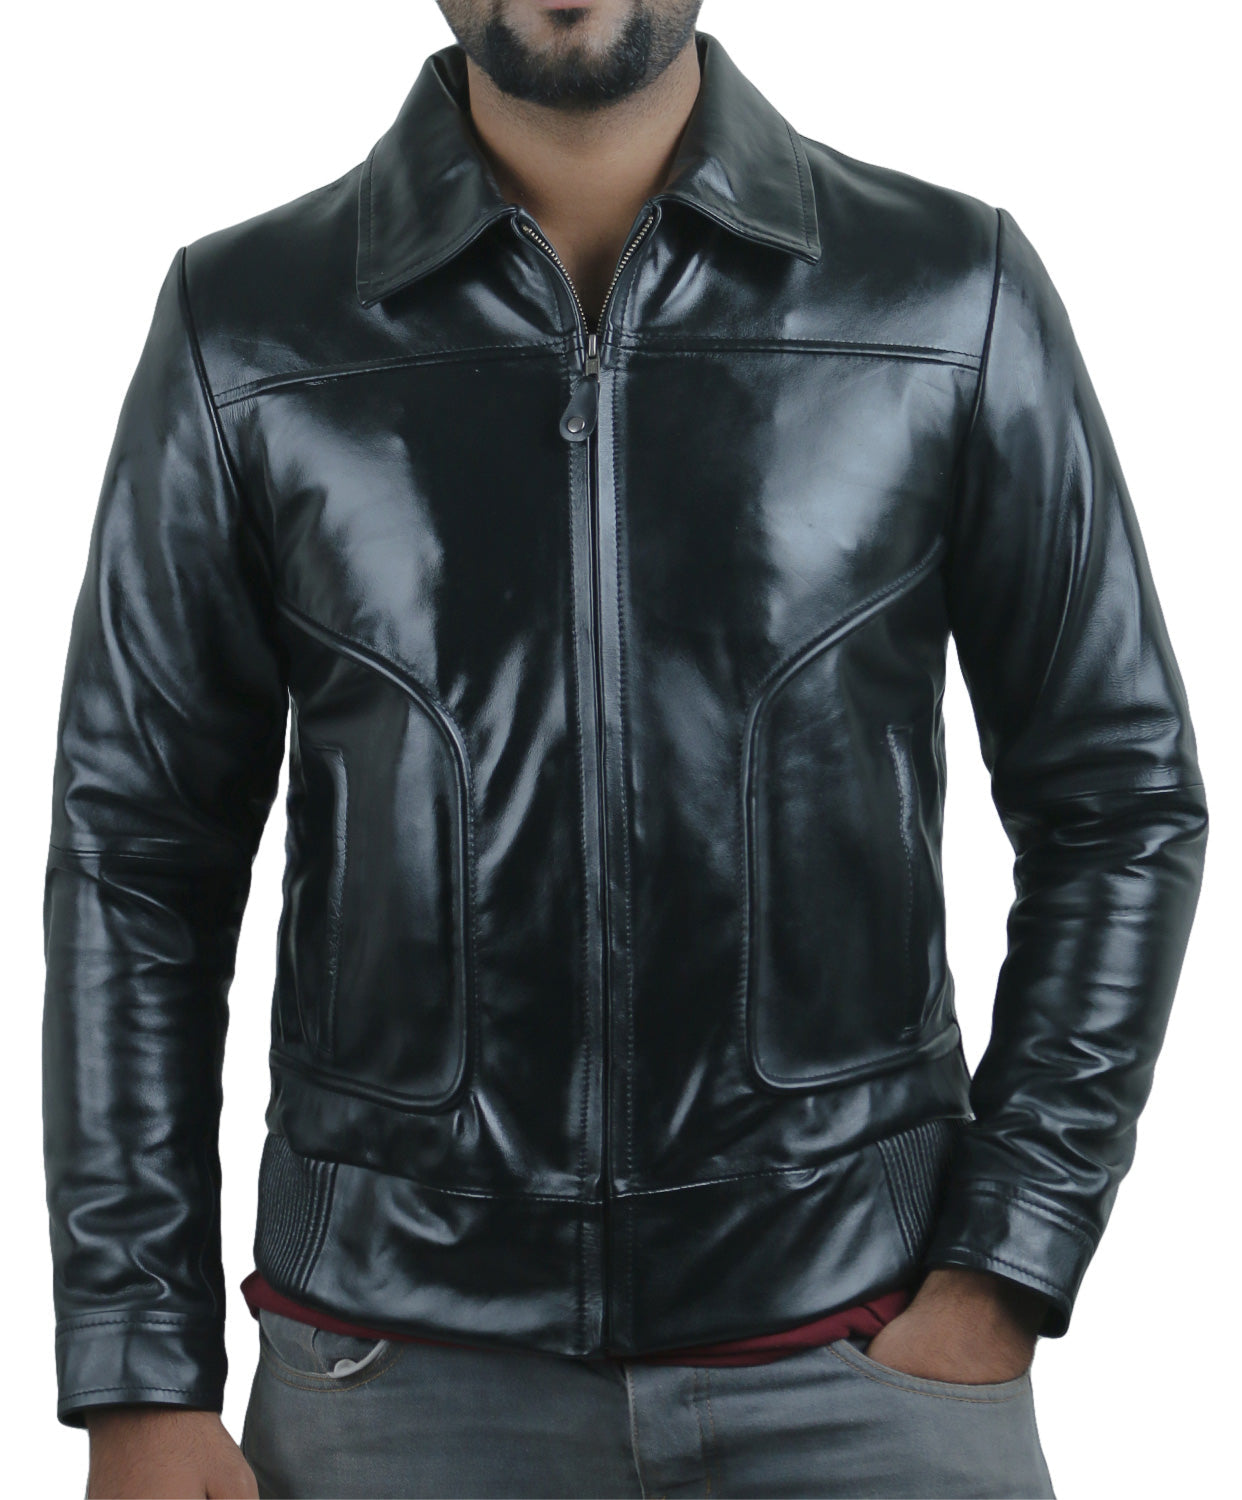 Leather Jackets Hub Mens Genuine Cowhide Leather Jacket (Black, Aviator Jacket) - 1501278